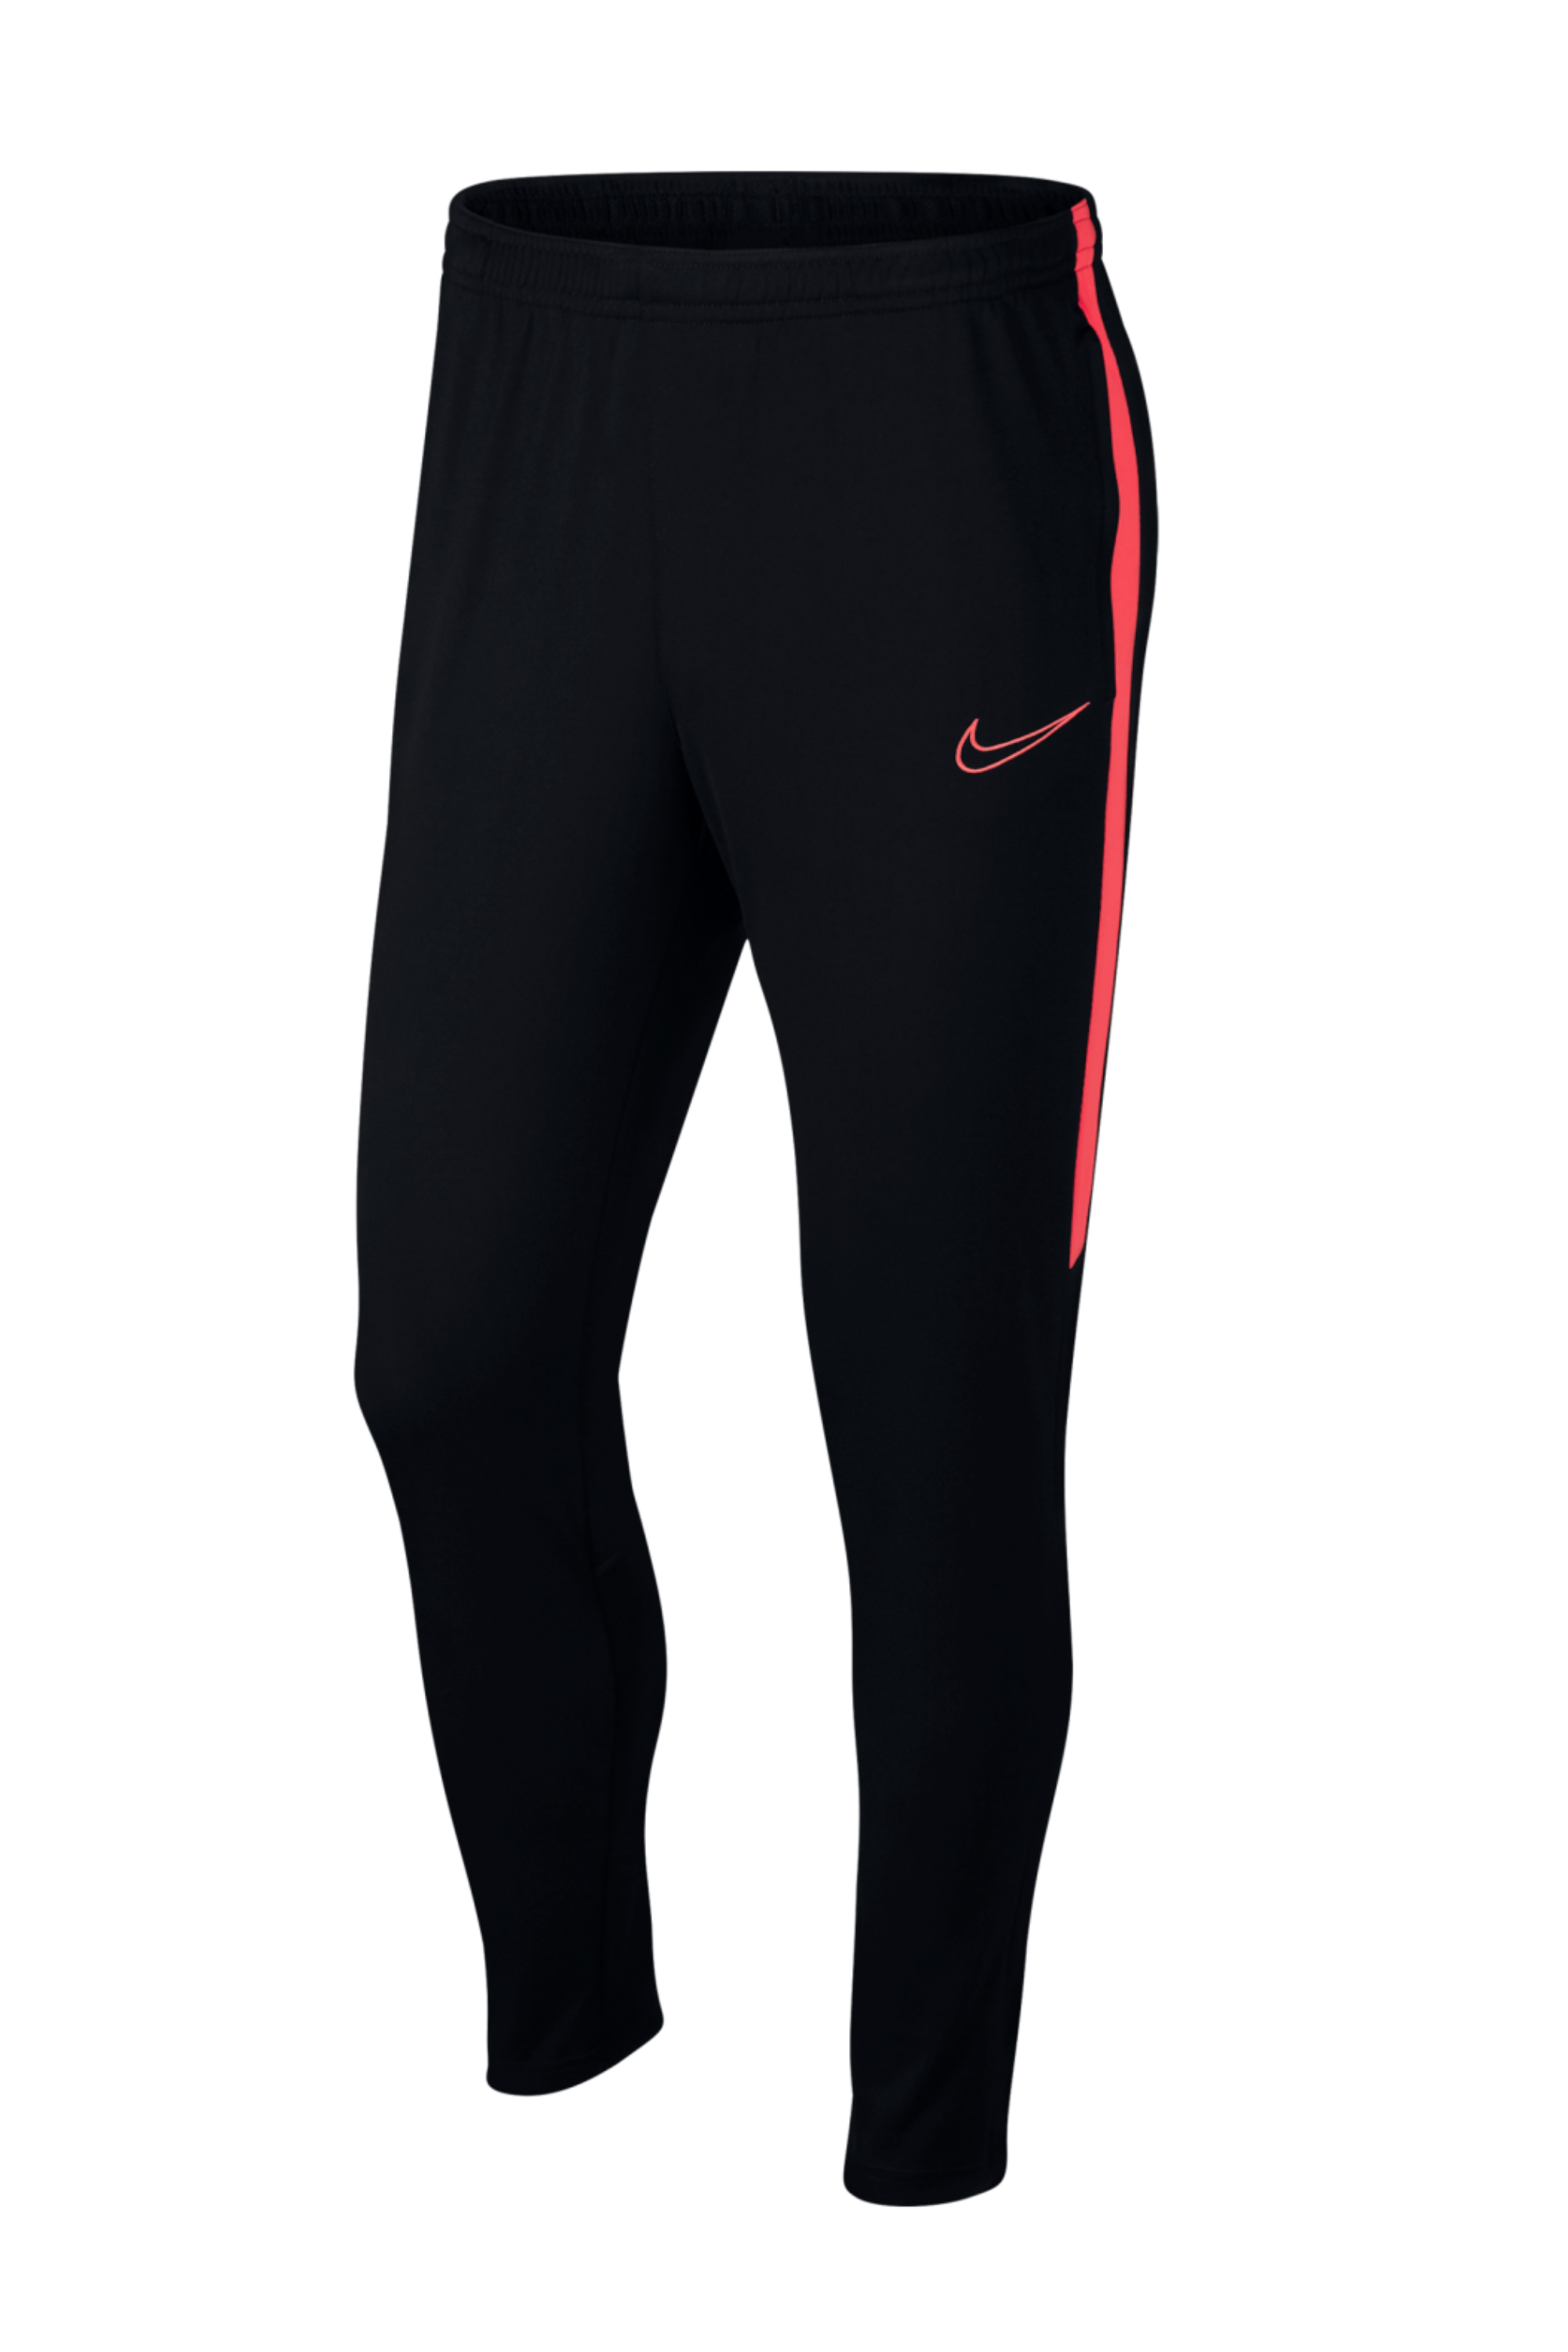 Pants Nike Dry Academy | R-GOL.com 